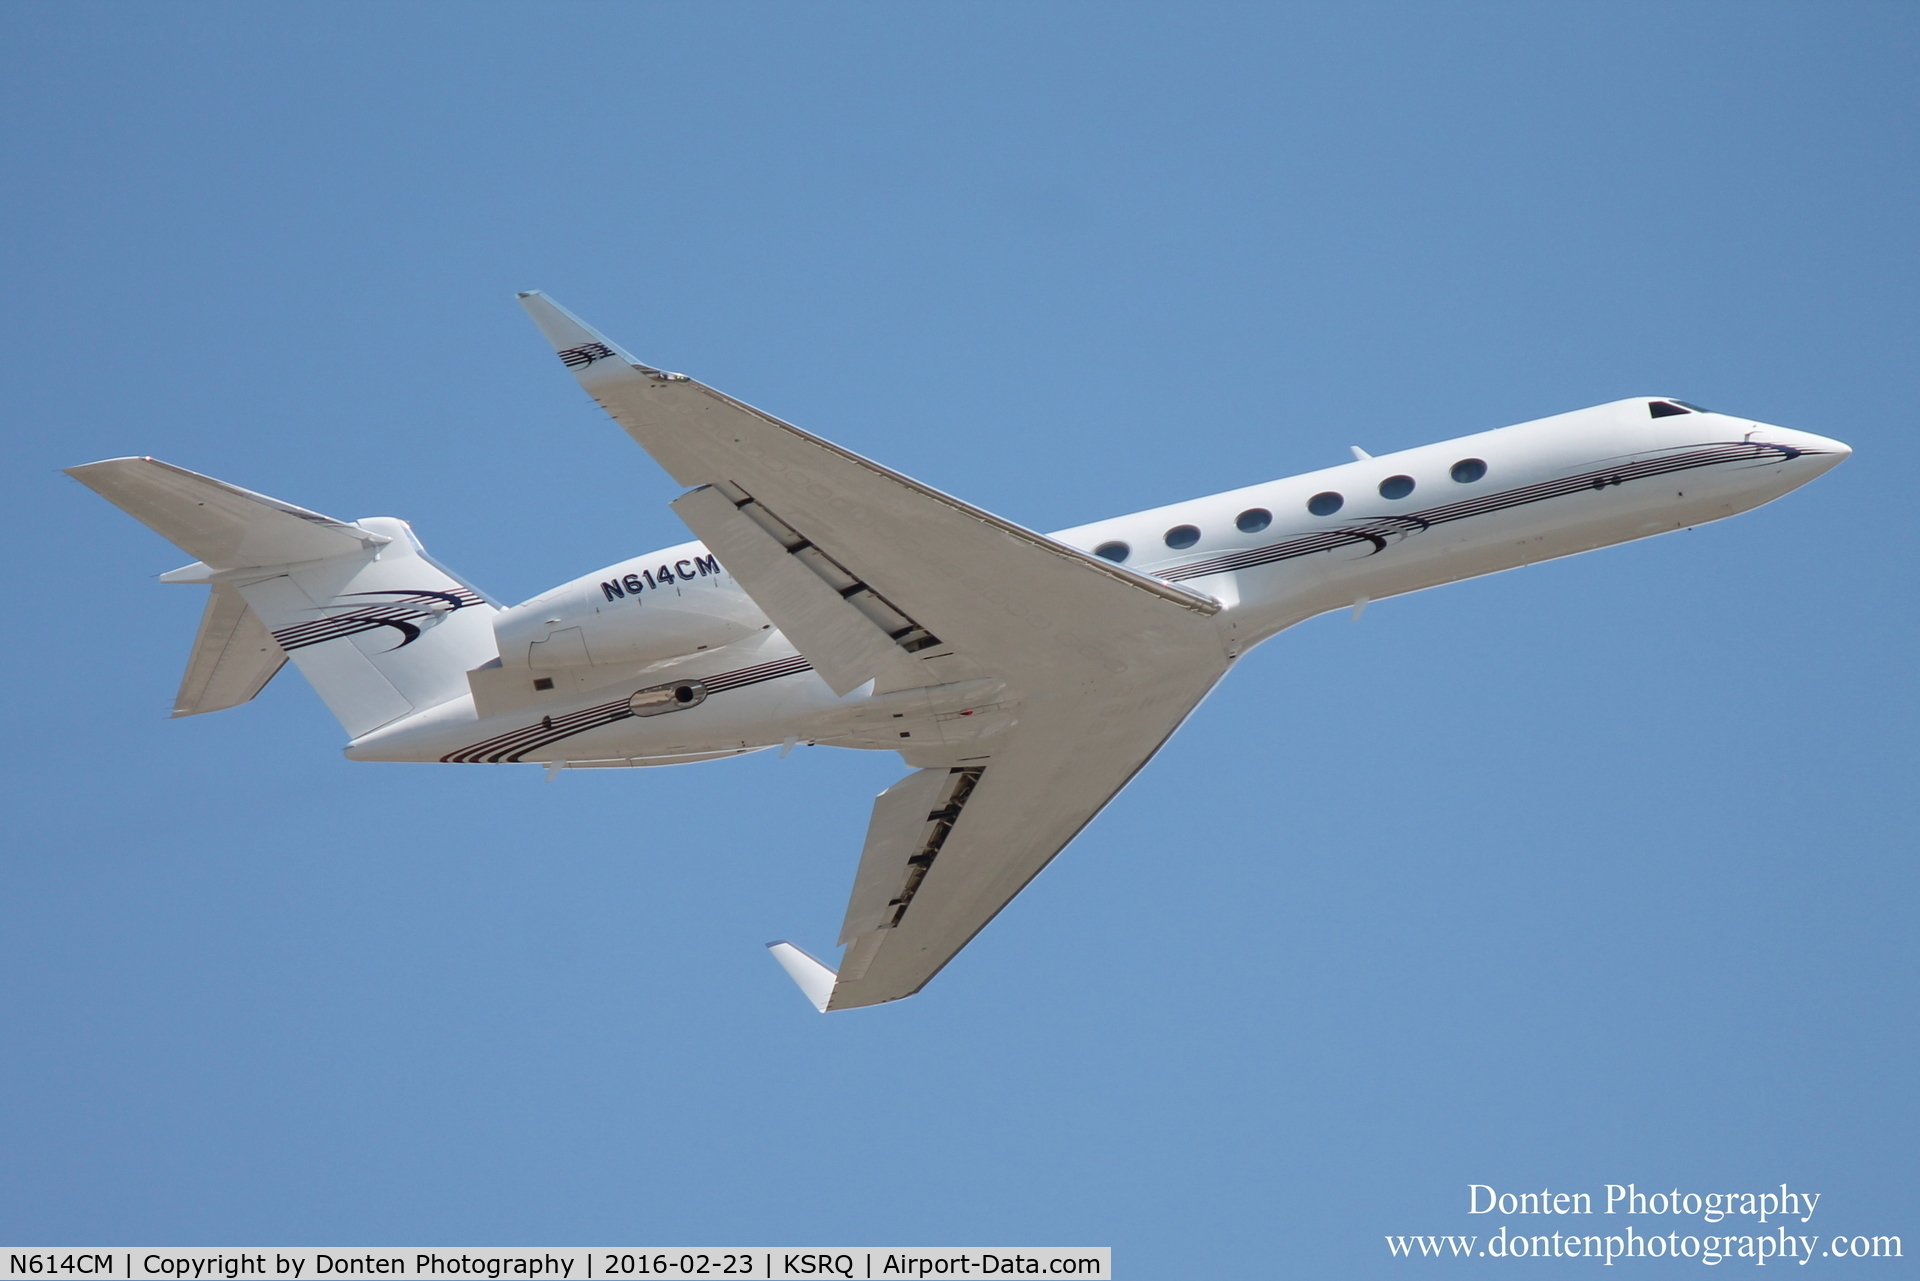 N614CM, 2000 Gulfstream Aerospace G-V C/N 614, Gulfstream V (N614CM) departs Sarasota-Bradenton International Airport